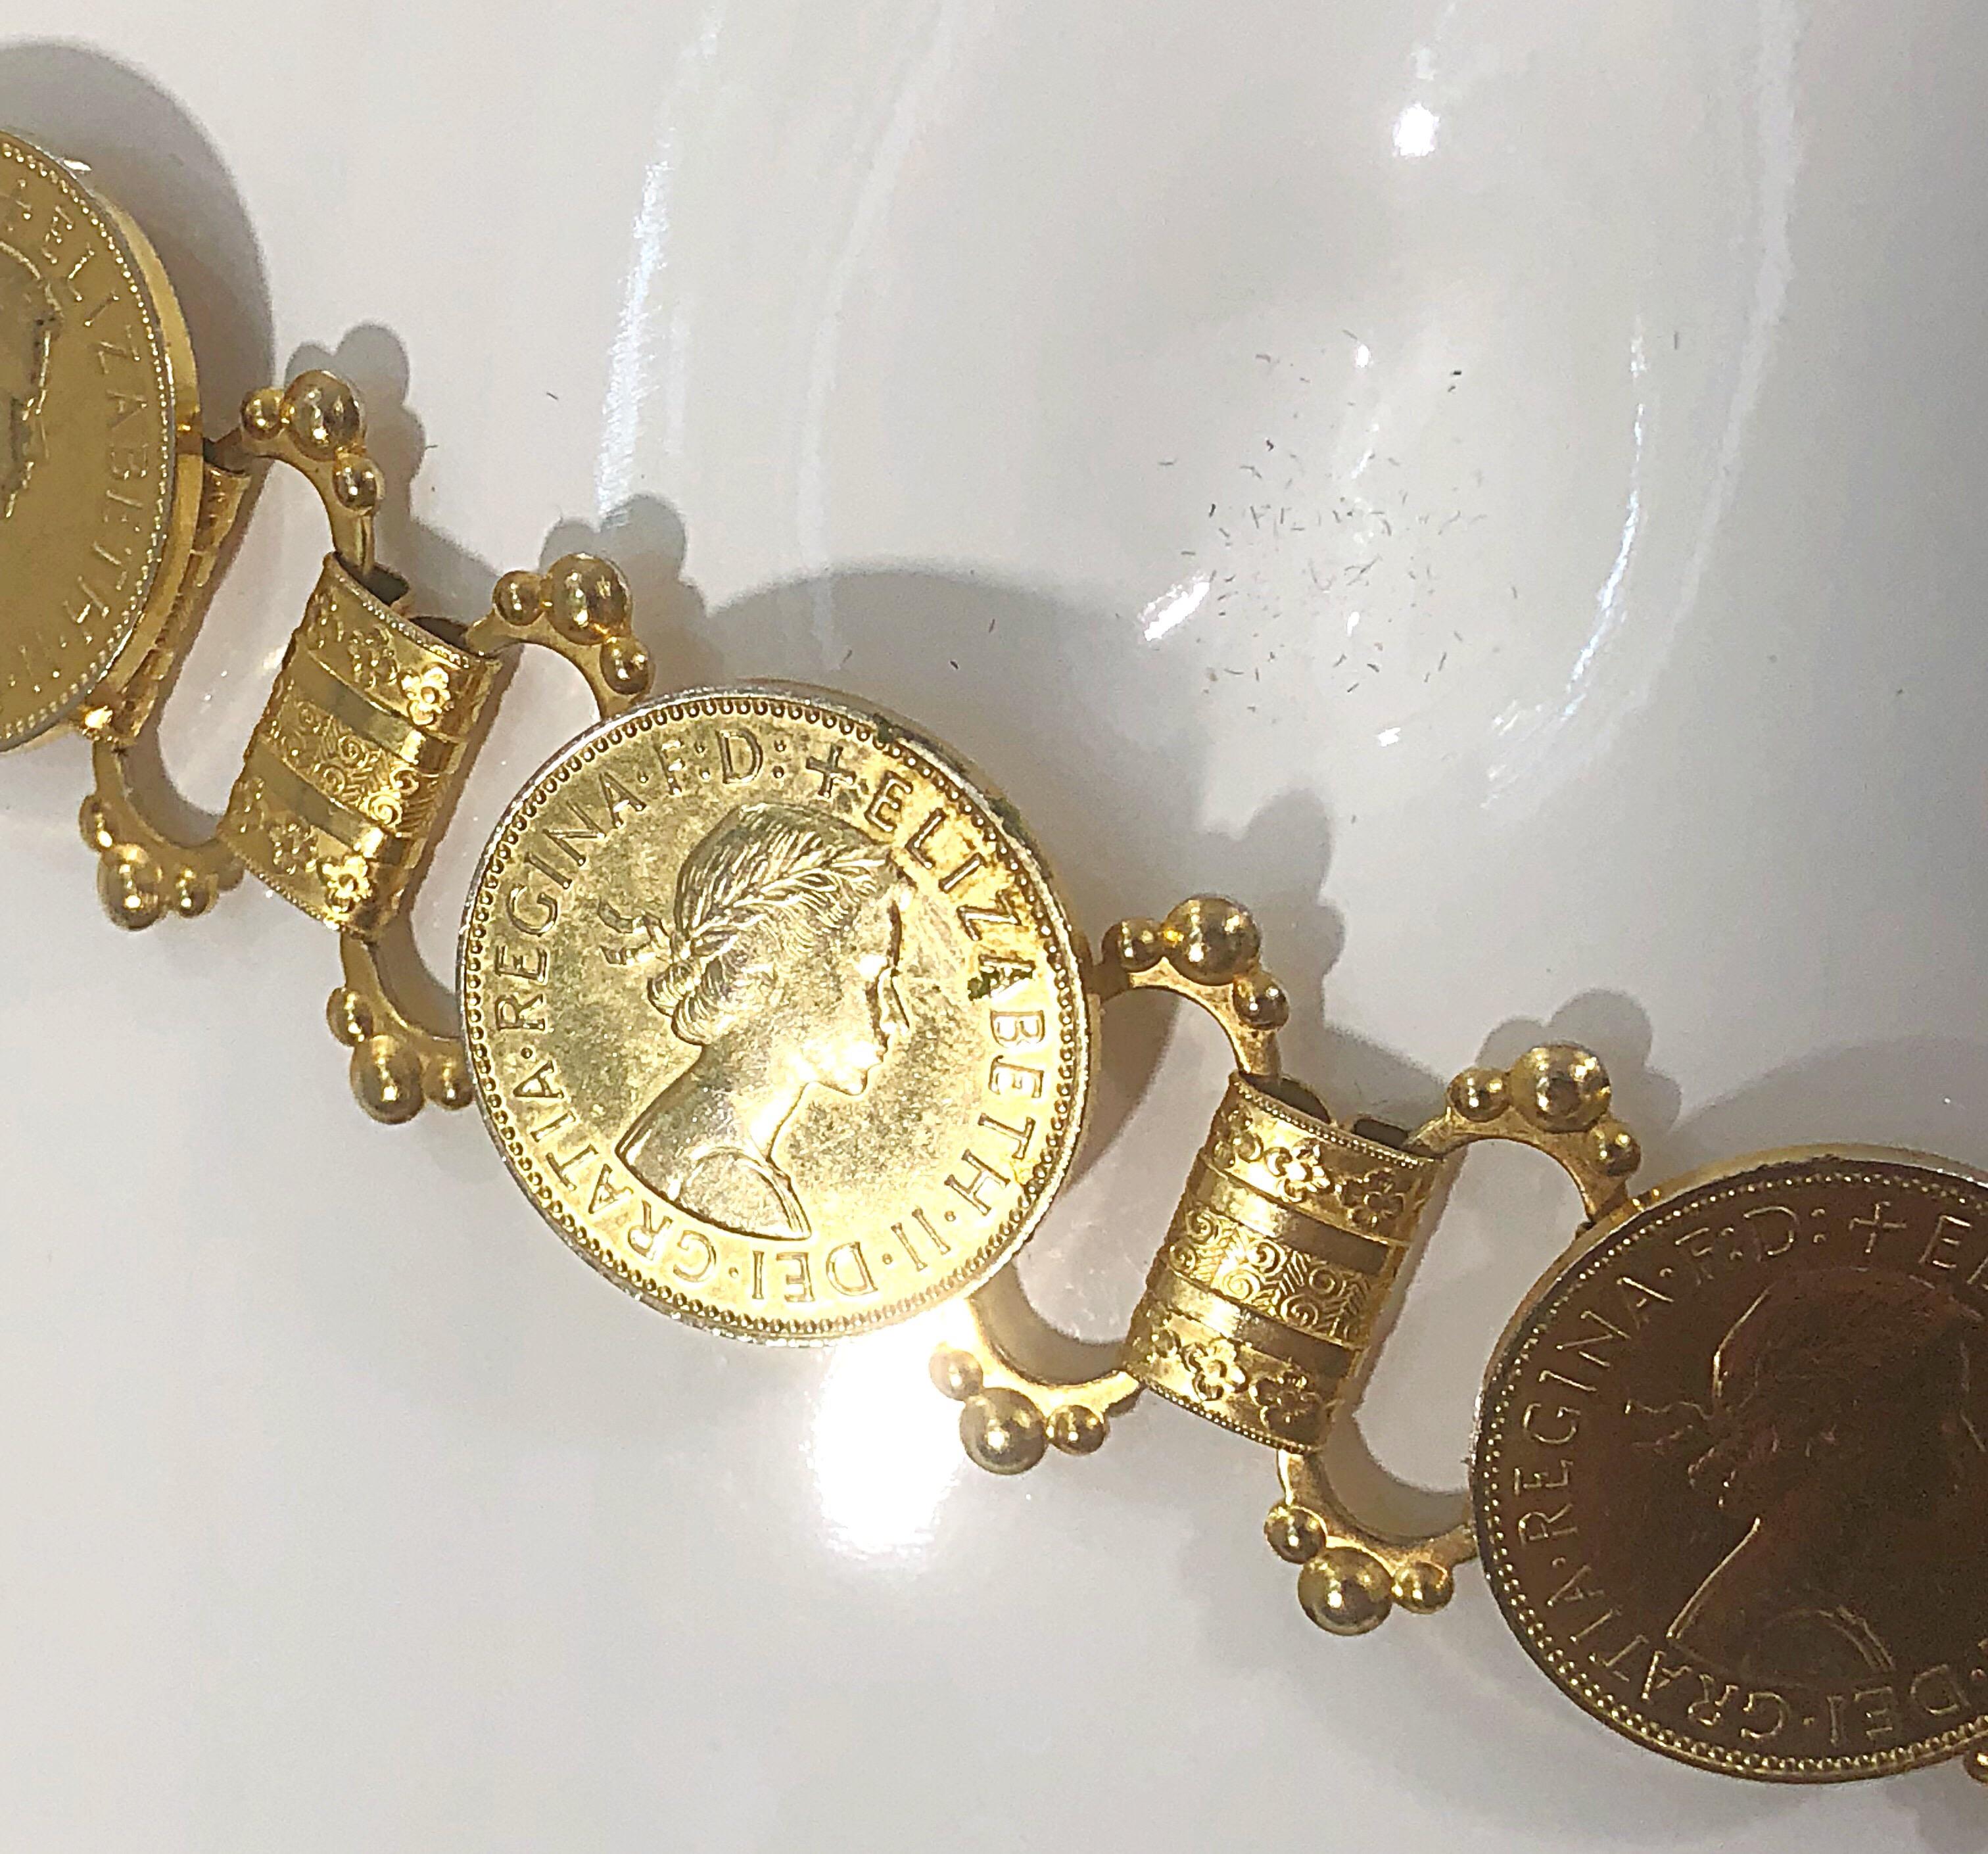 Elizabeth Dei Gratia 1960s Gold Coin Vintage 60s Novelty Chain Belt or Necklace 9